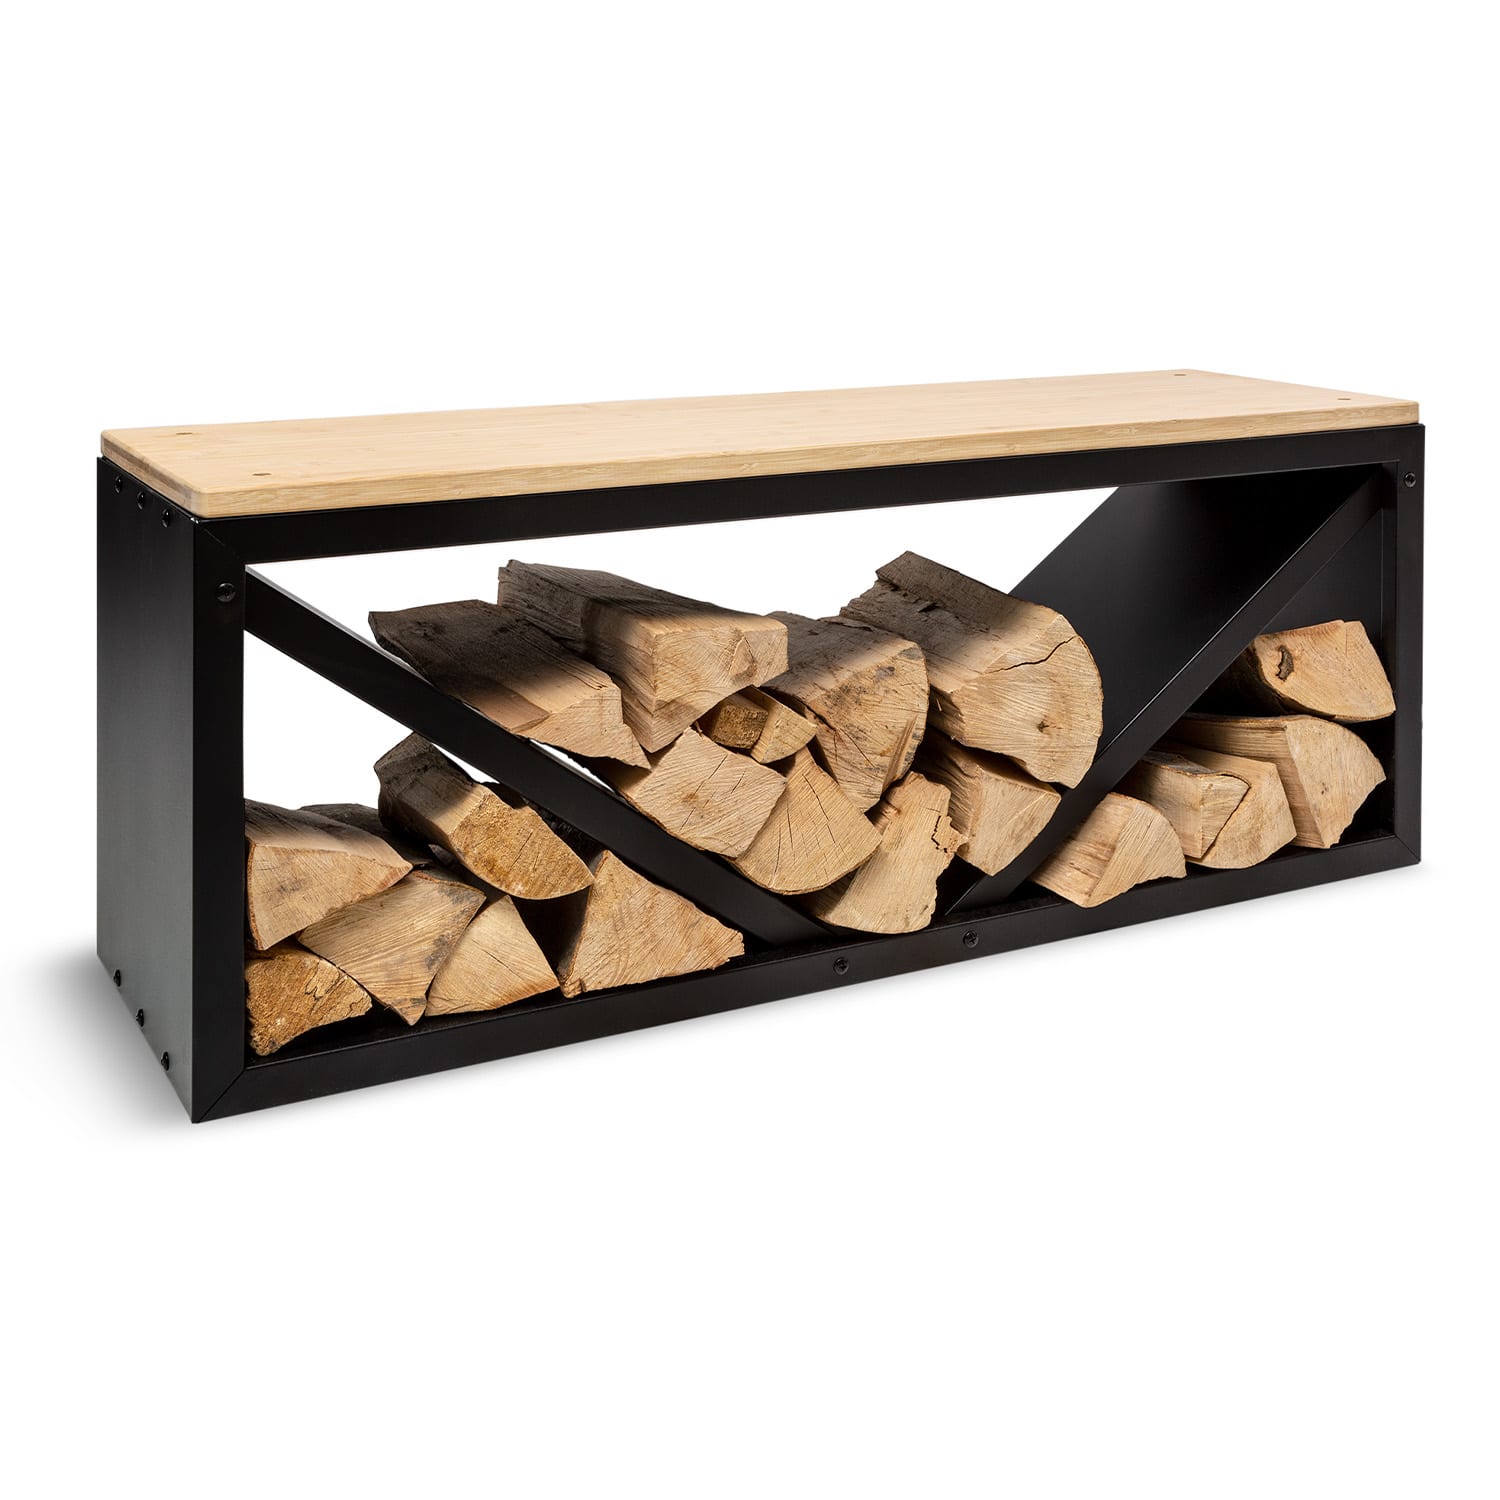 Blumfeldt Kindlewood L Black, suport pentru lemne, bancă, 104 x 40 x 35 cm, bambus, zinc